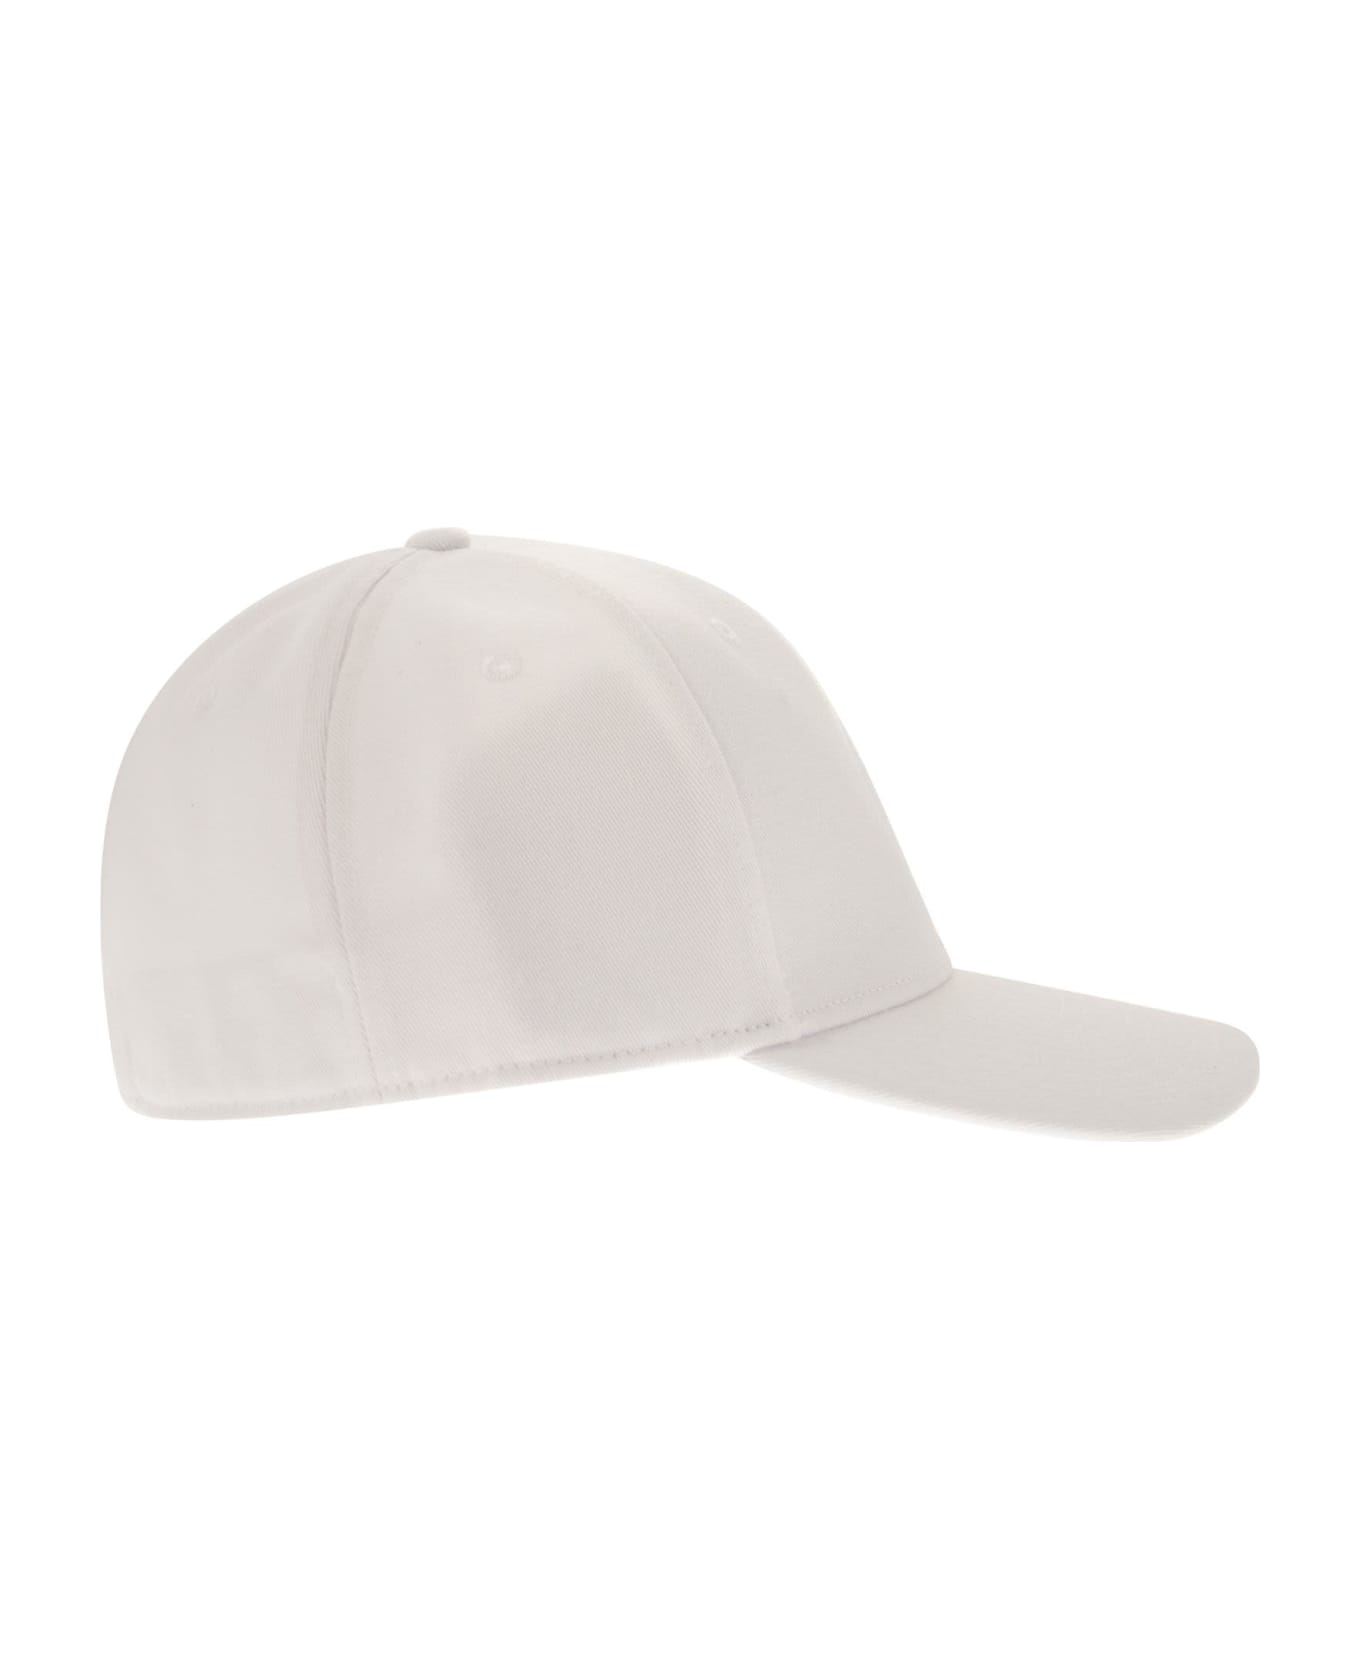 Canada Goose Tonal - Hat With Visor - White